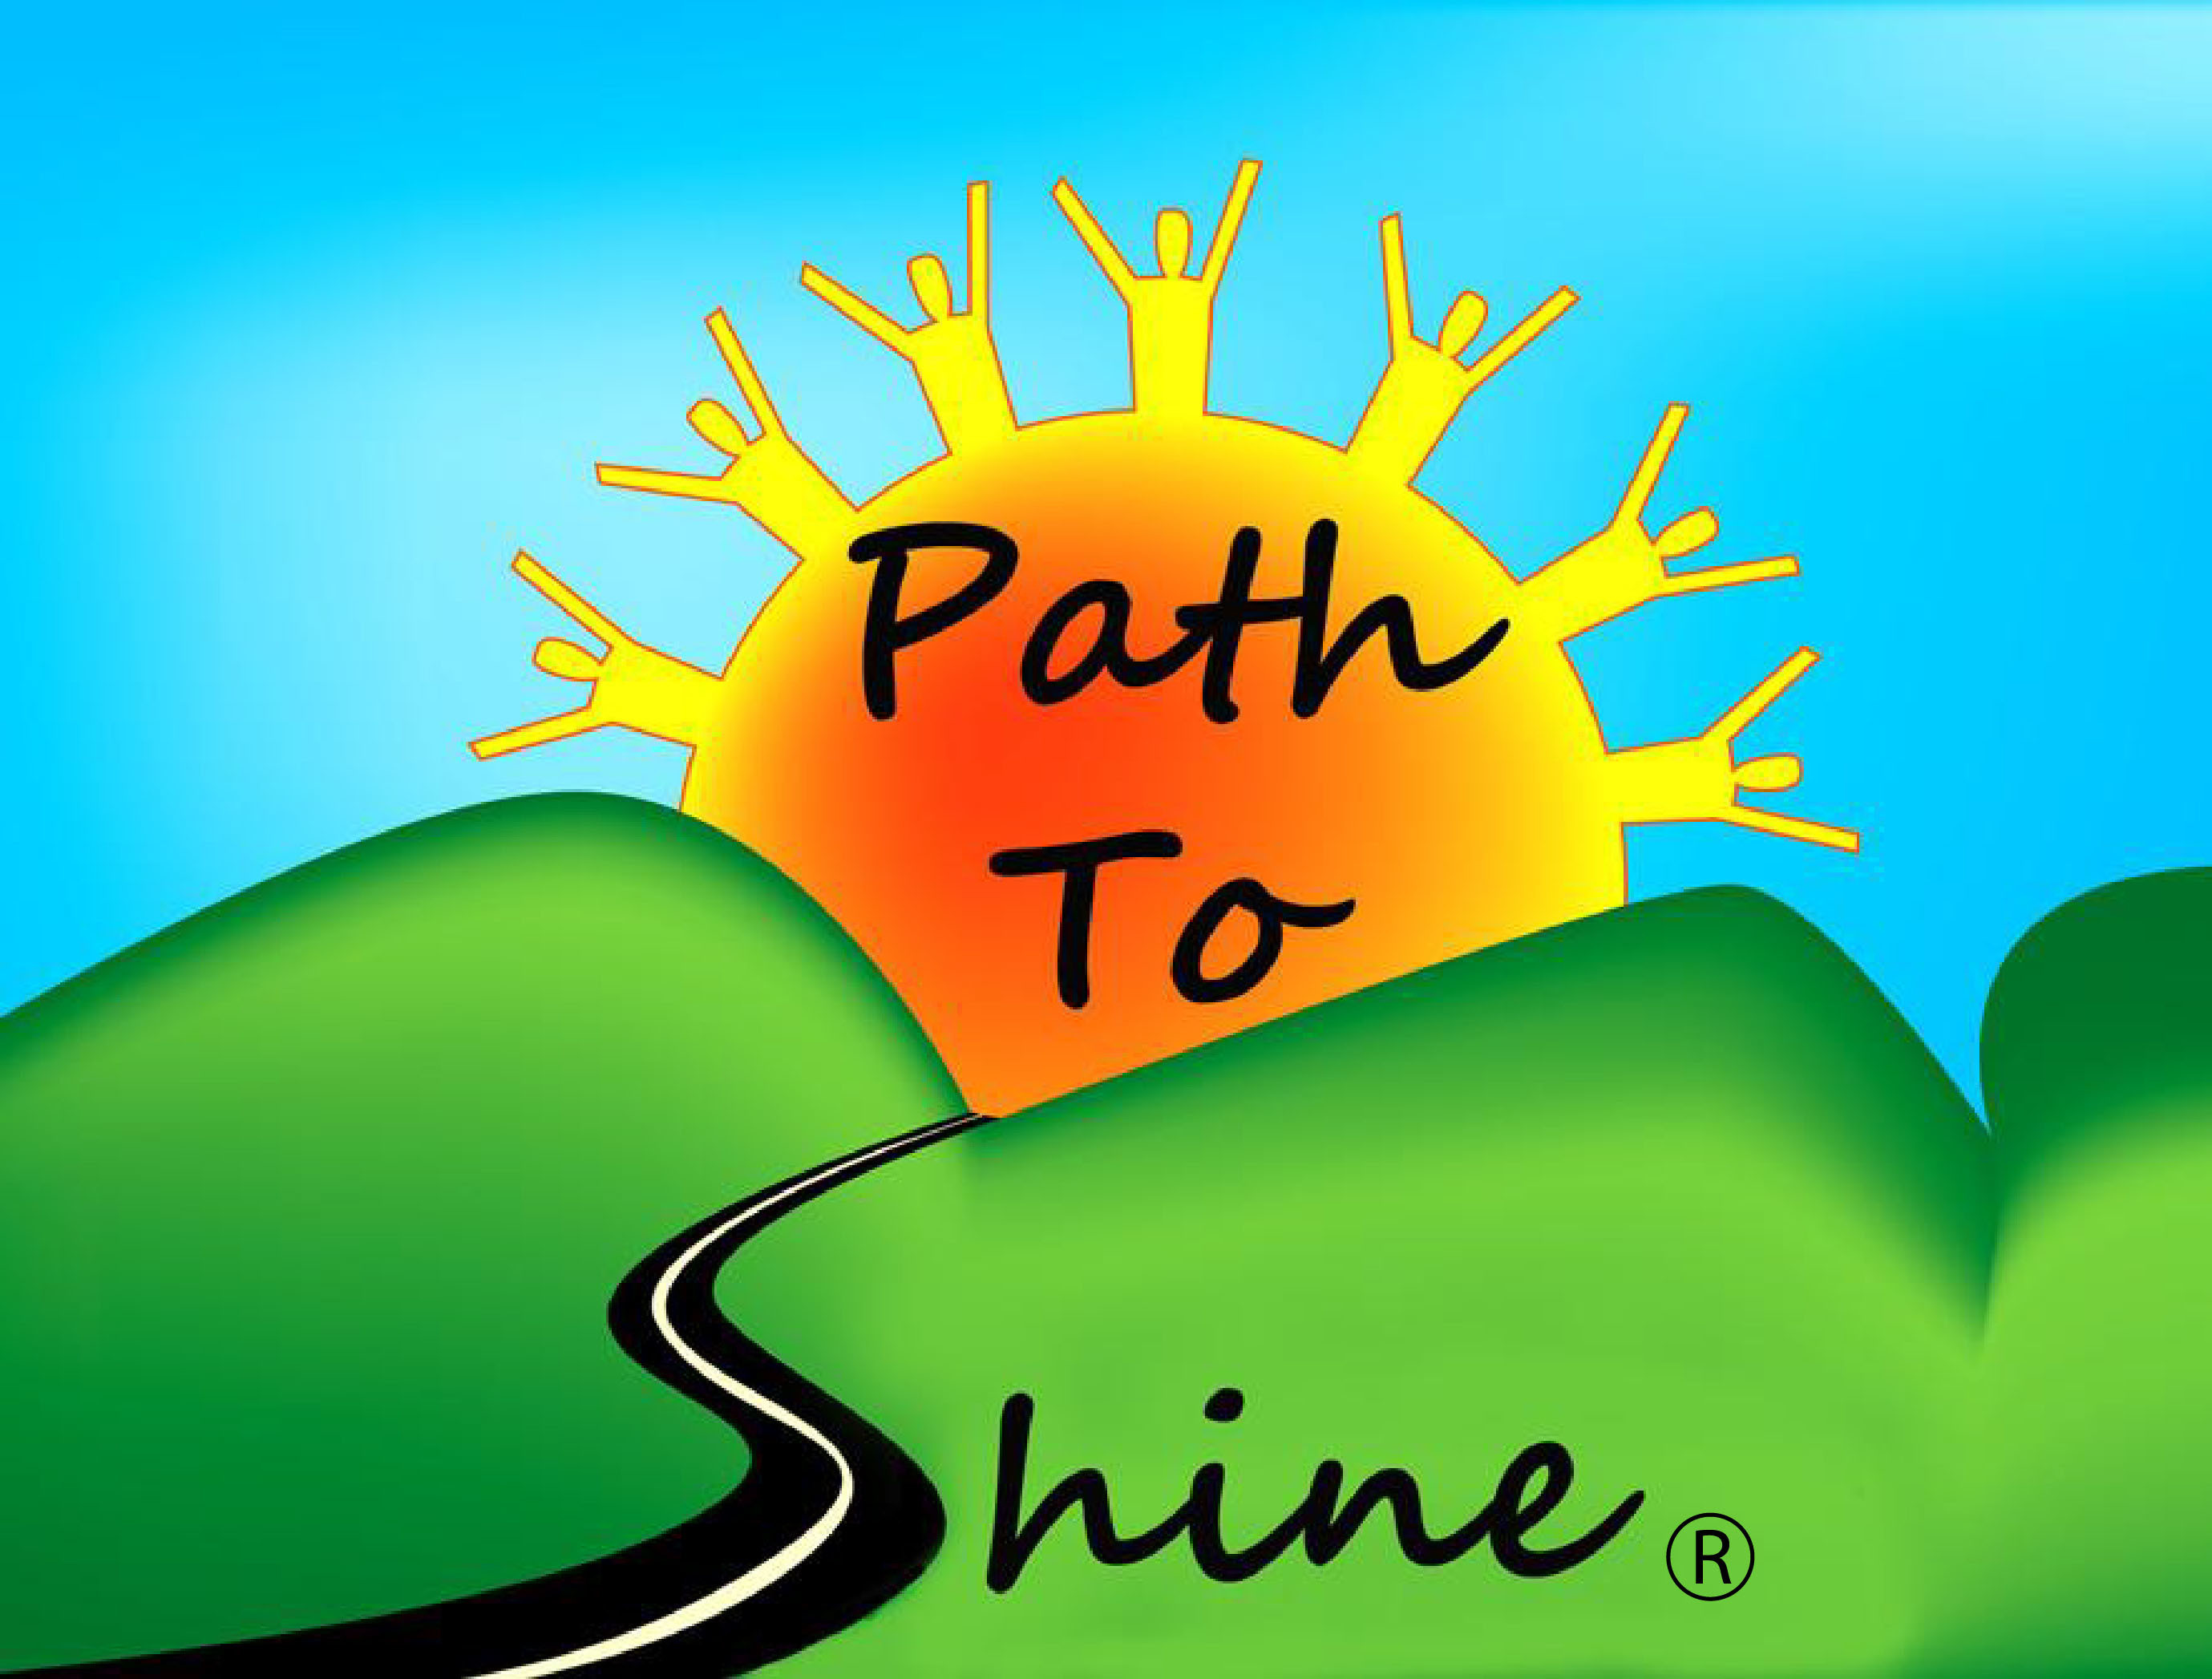 Path To Shine(R)